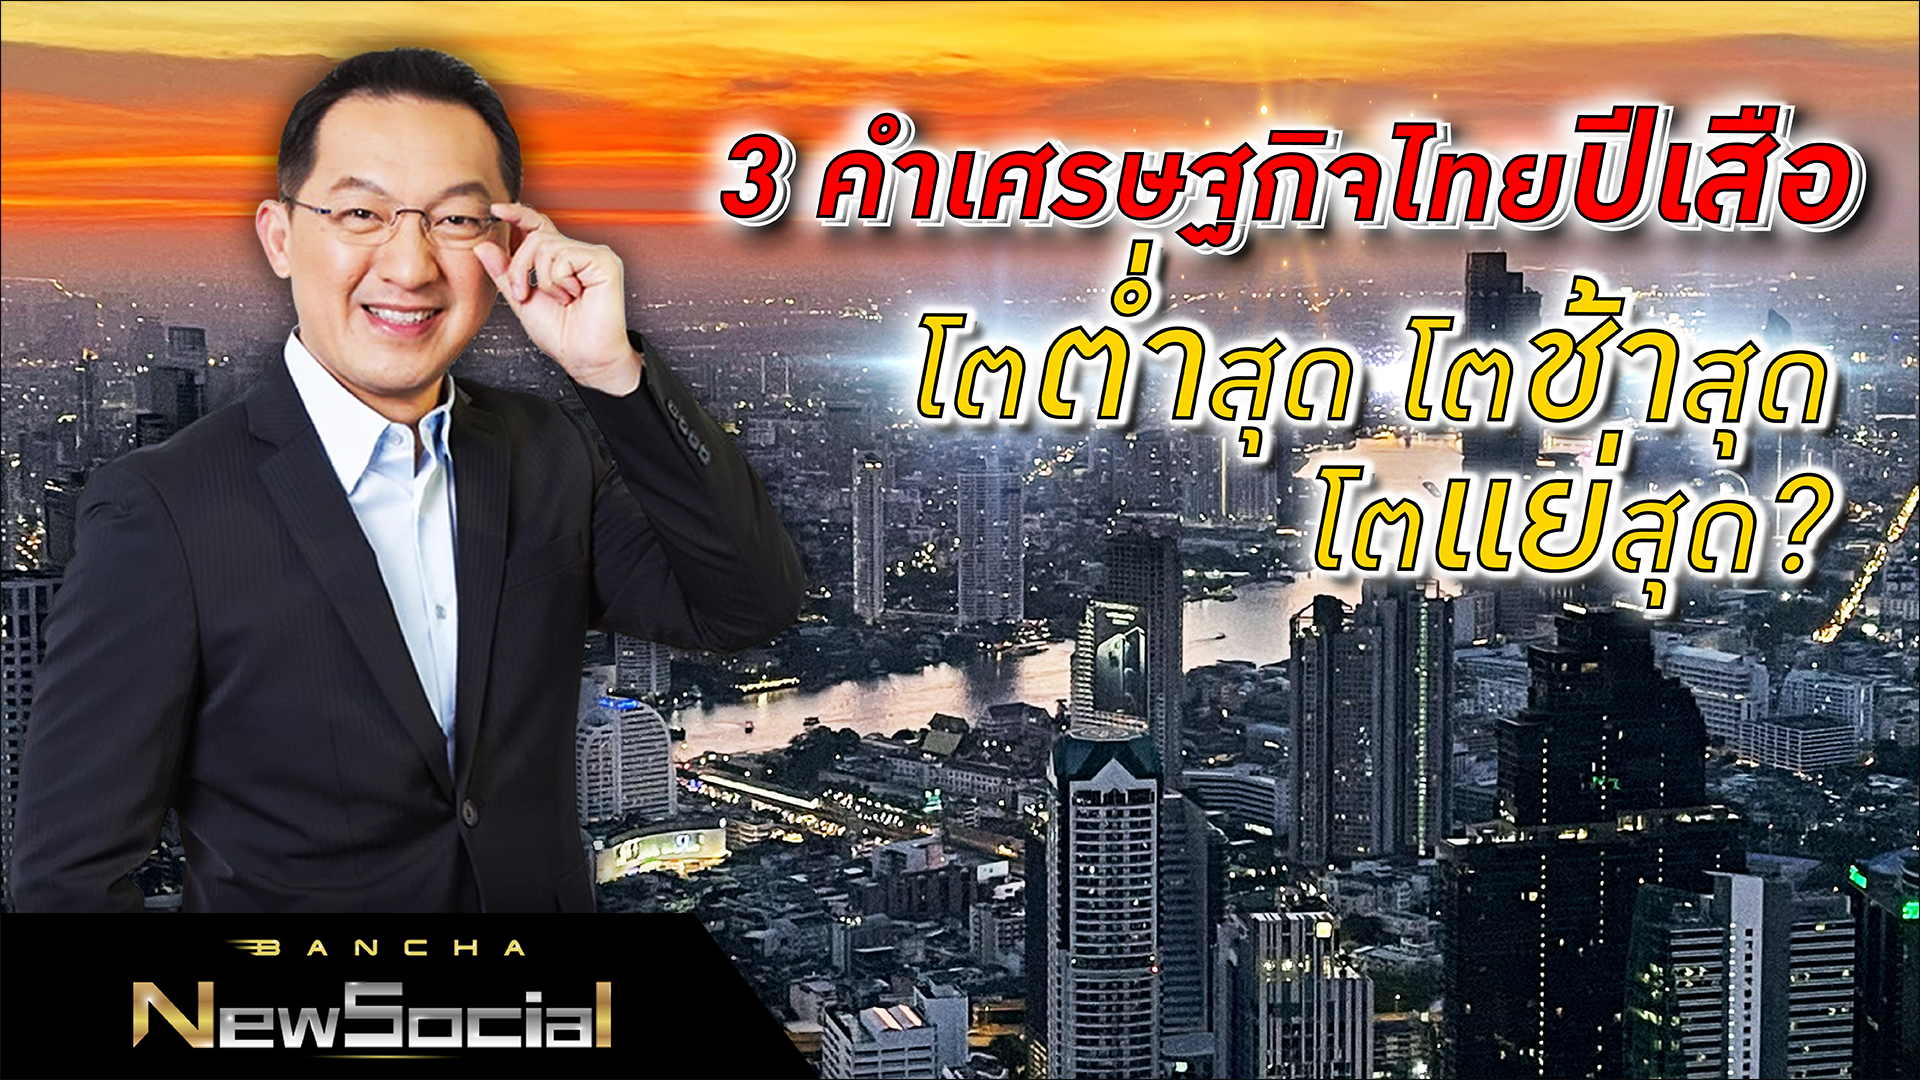 Bancha NewSocial EP.72: 3 คำเศรษฐกิจไทยปีเสือ โตต่ำสุด โตช้าสุด โตแย่สุด